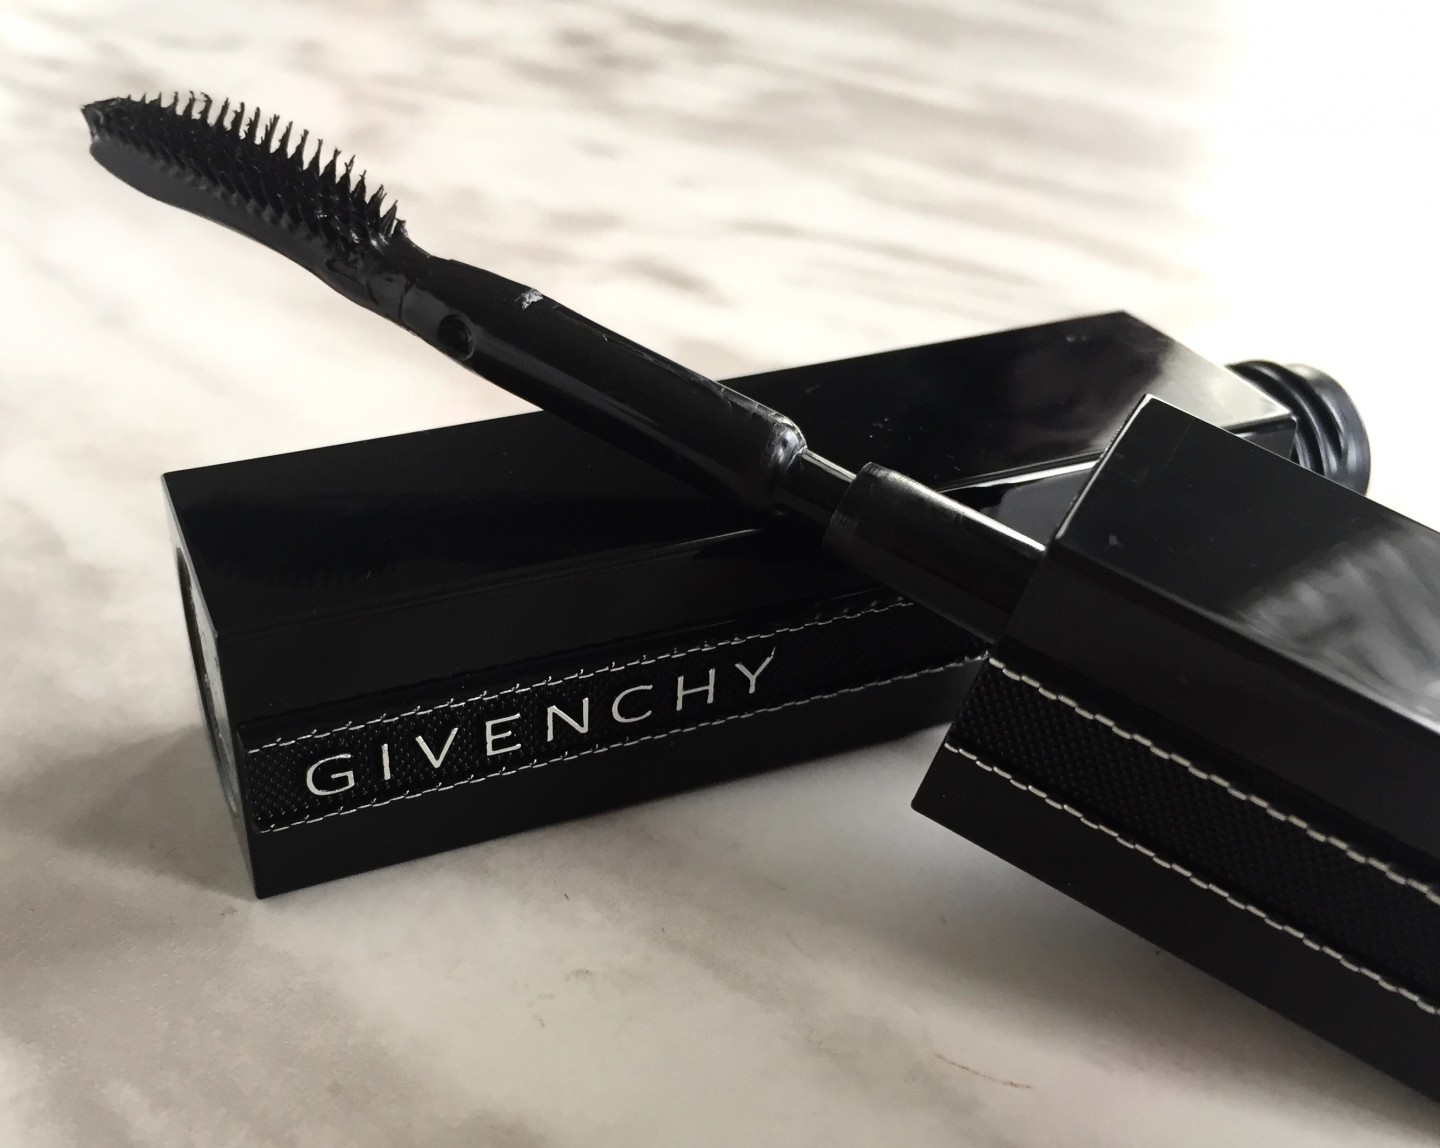 Givenchy Noir Interdit Mascara